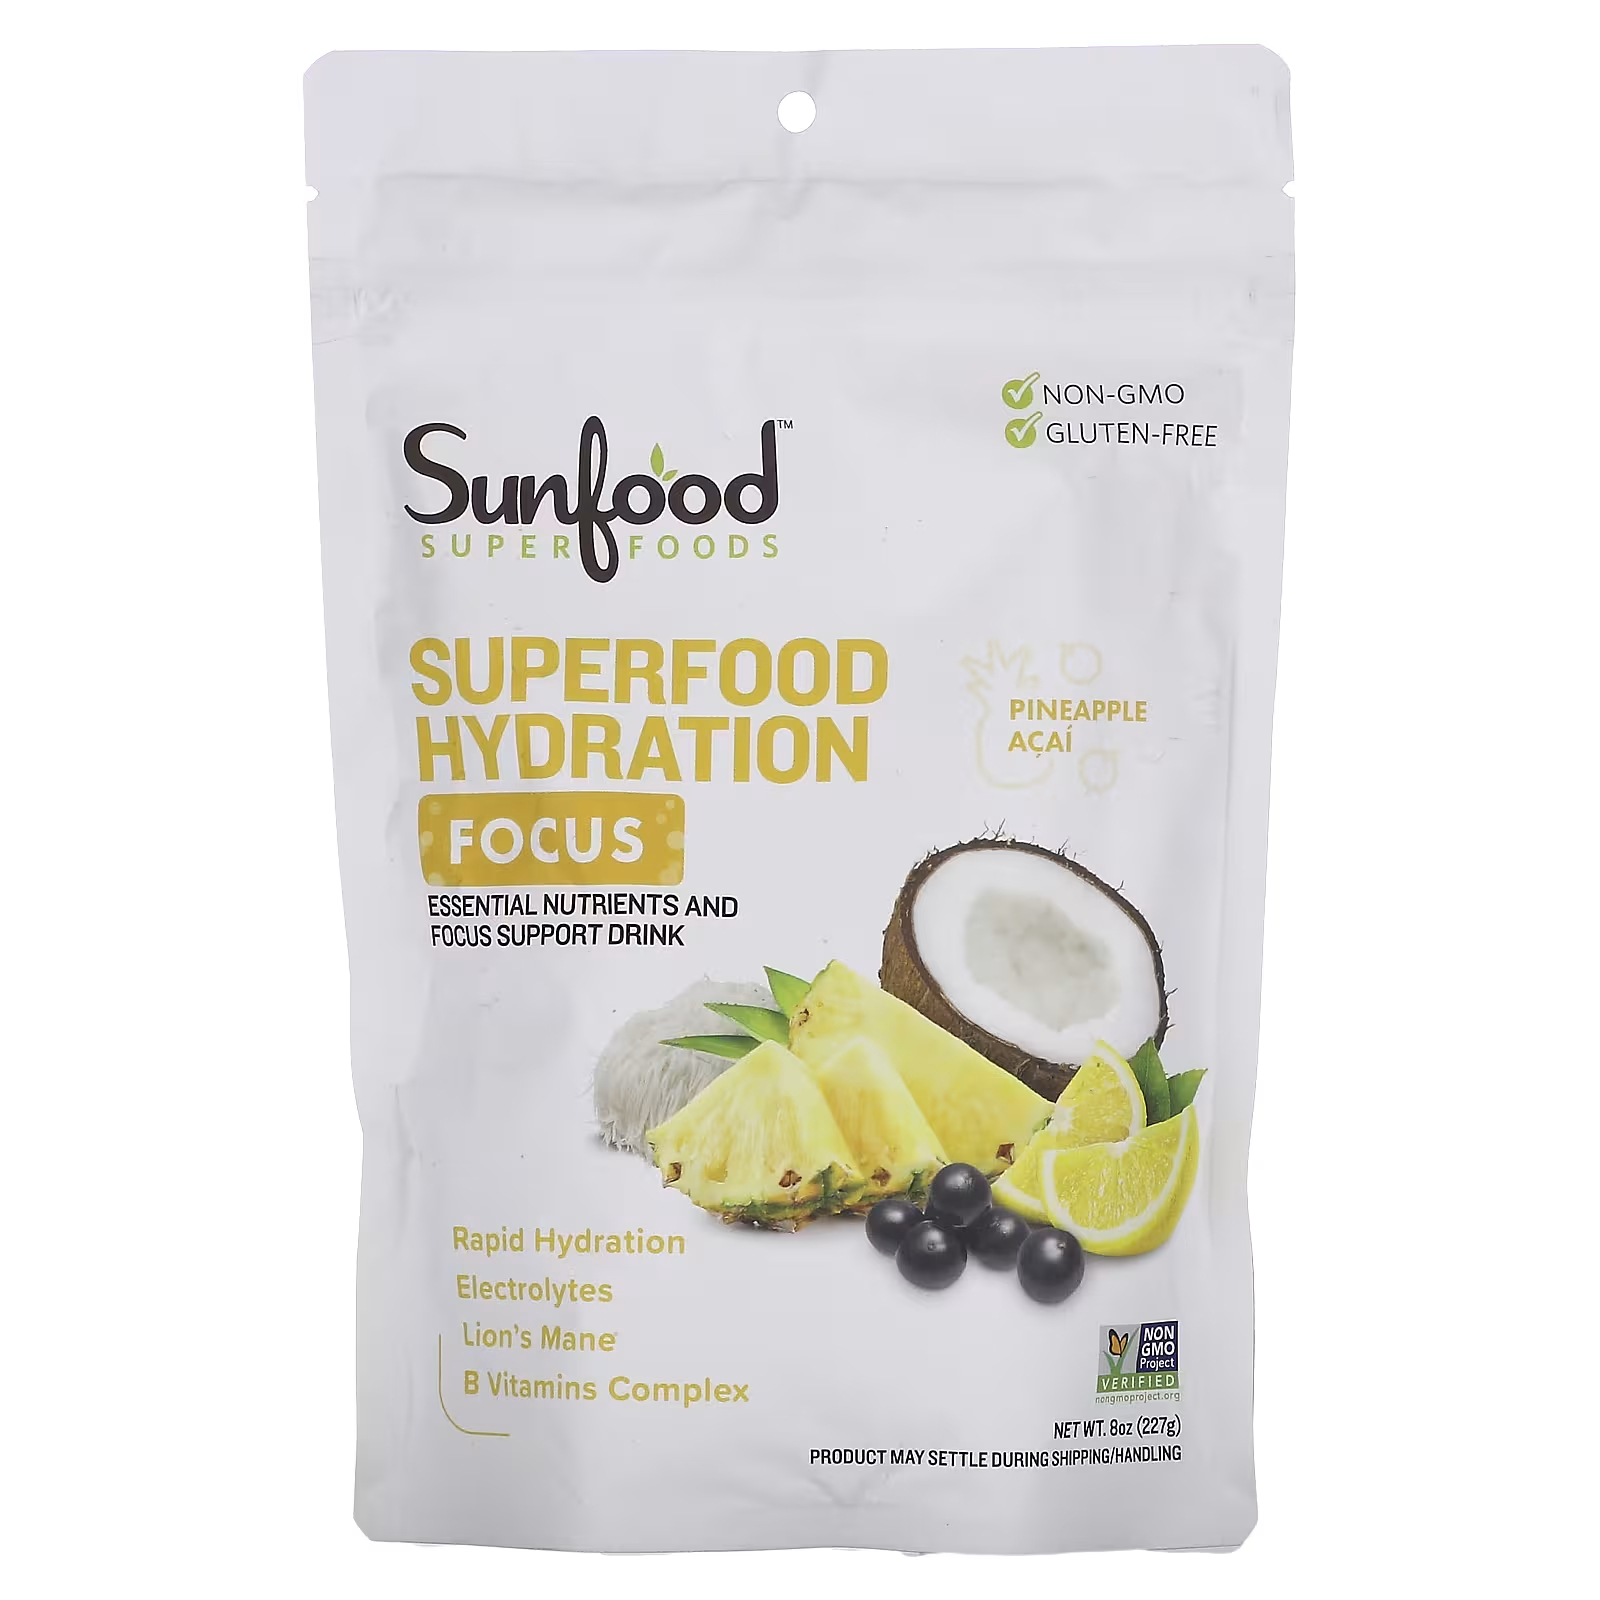 Суперфуд Sunfood Superfood Hydration Focus ананас и асаи, 227 г